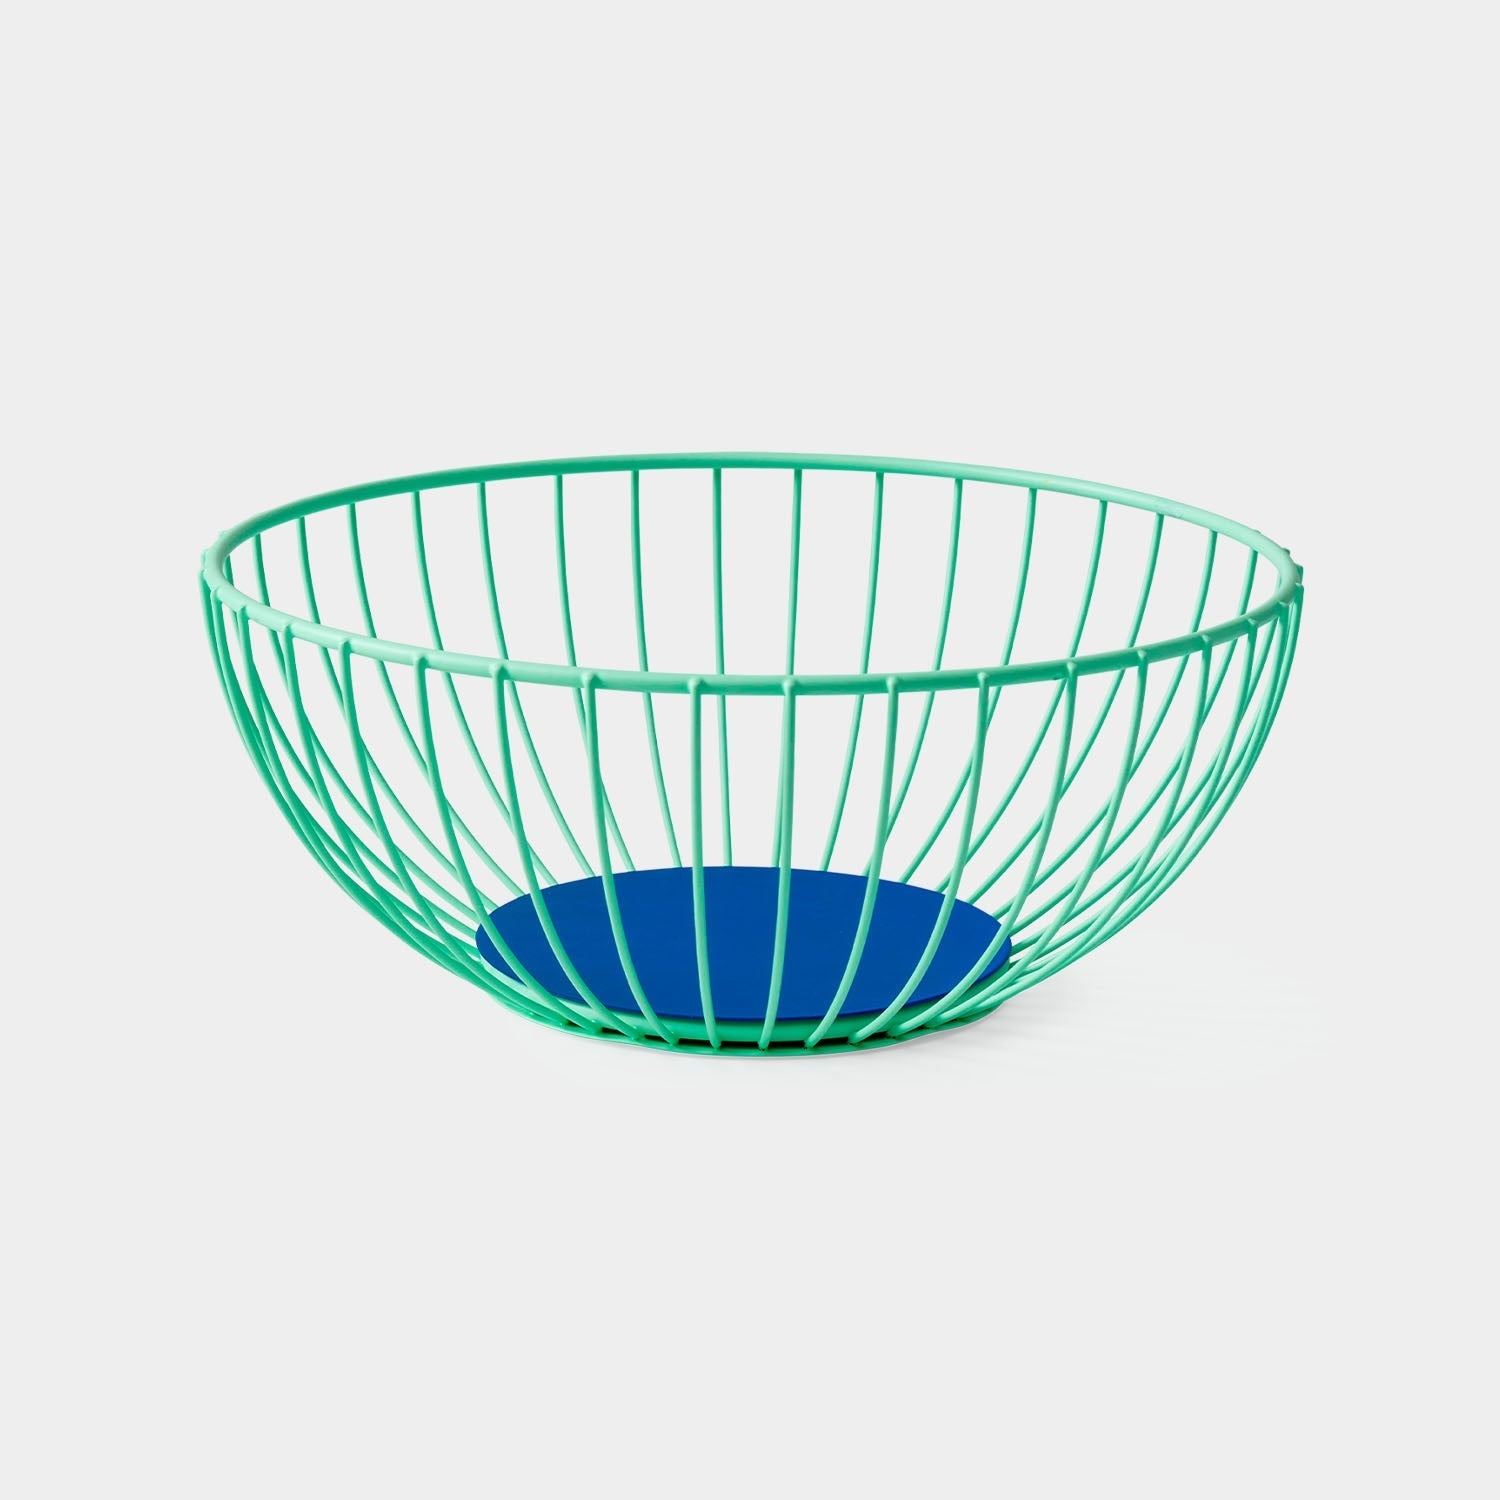 Iris Wire Basket in mint by OCTAEVO